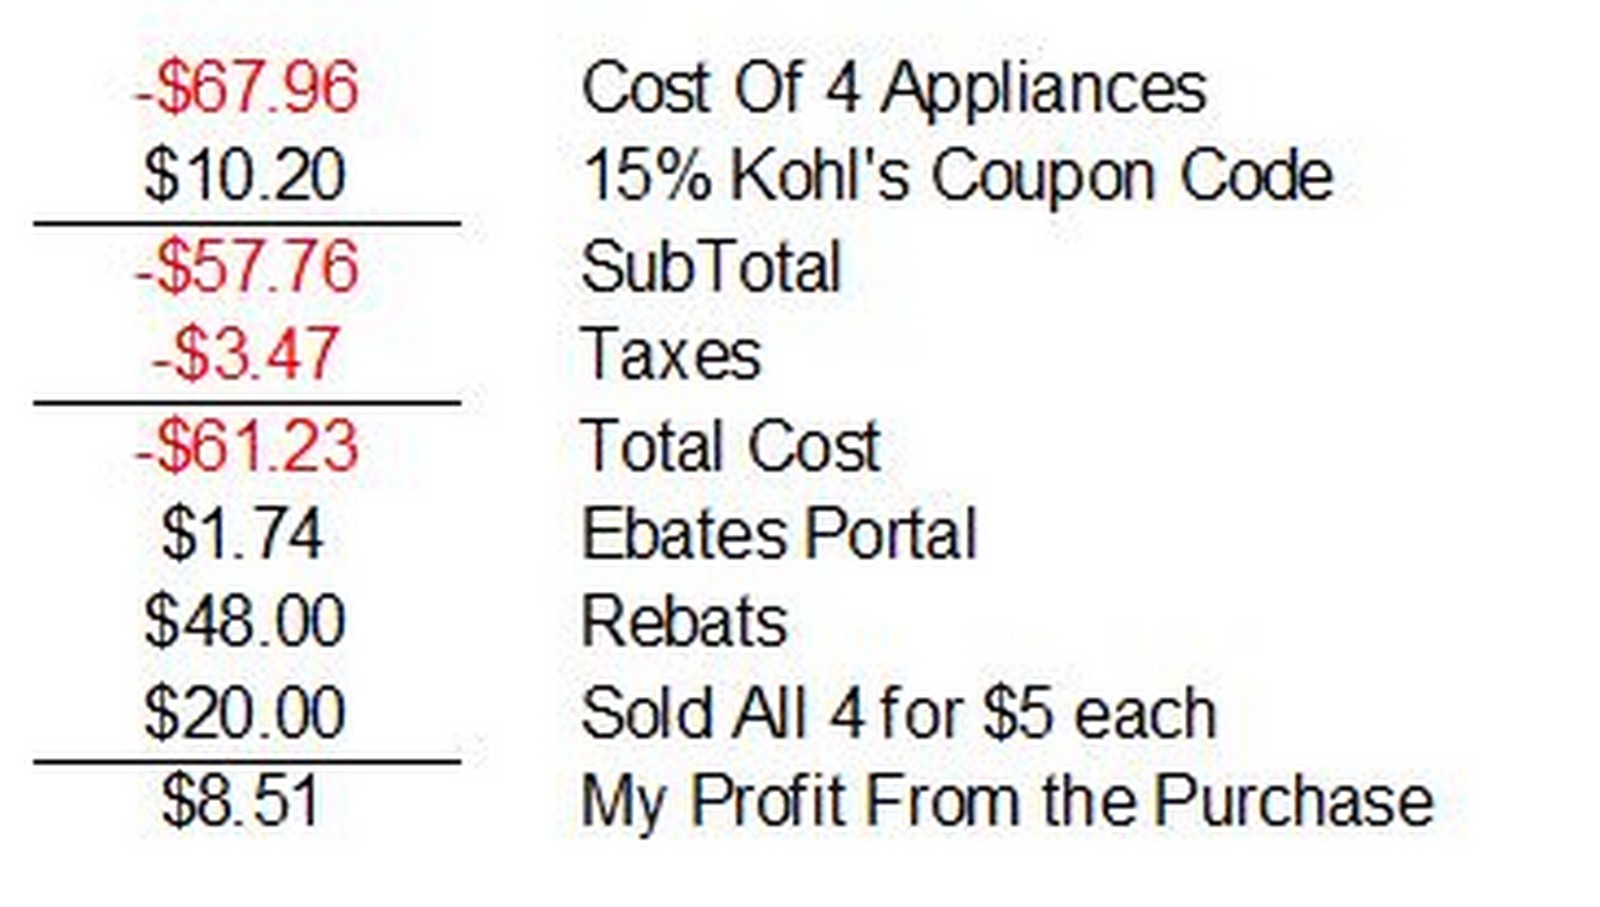 Selling Kohl's Personal Appliances